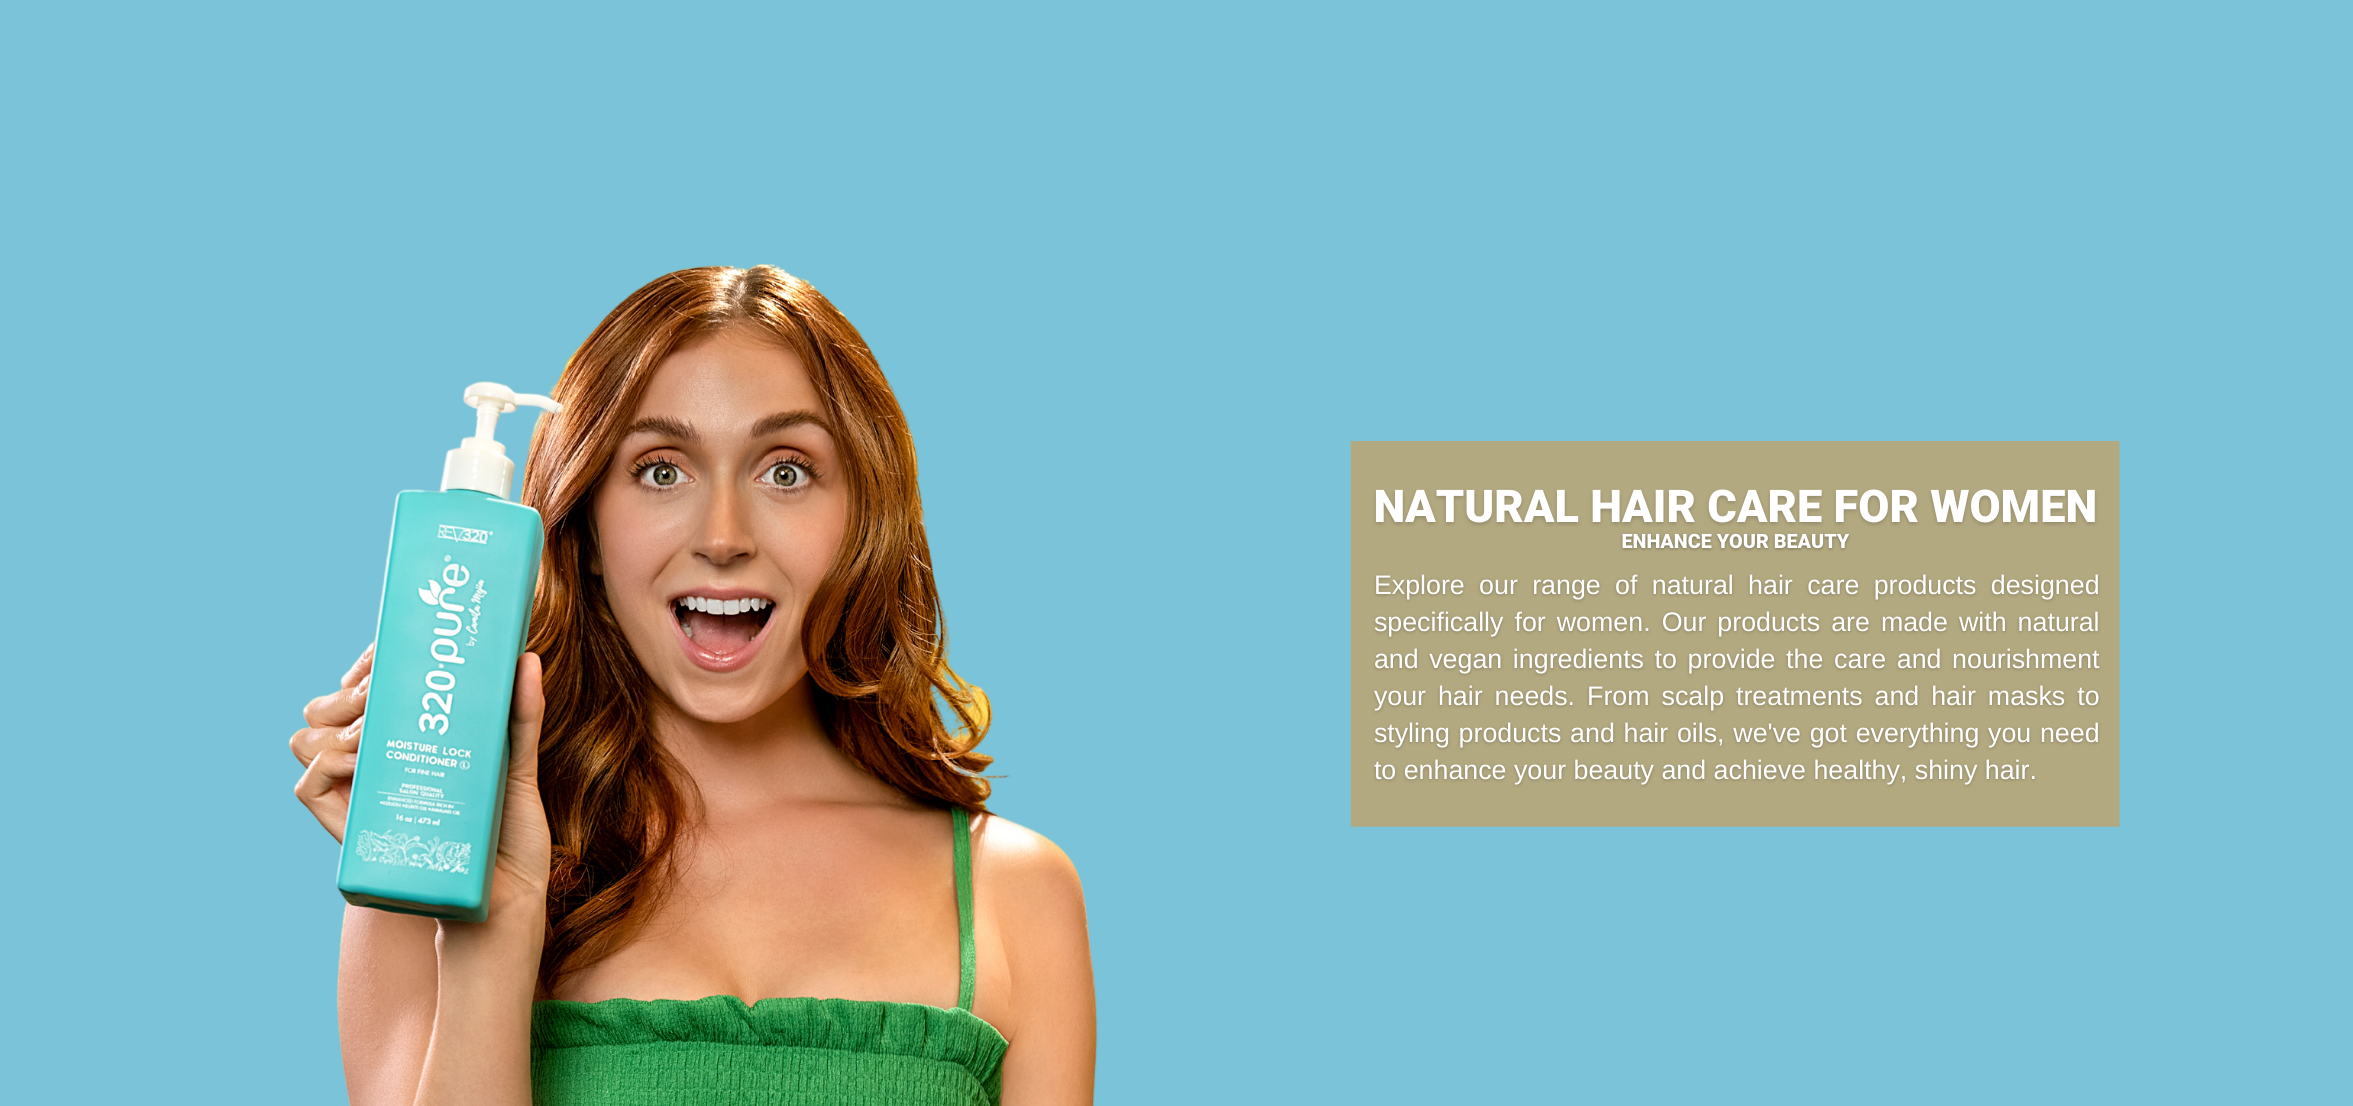 natural hair care regimen